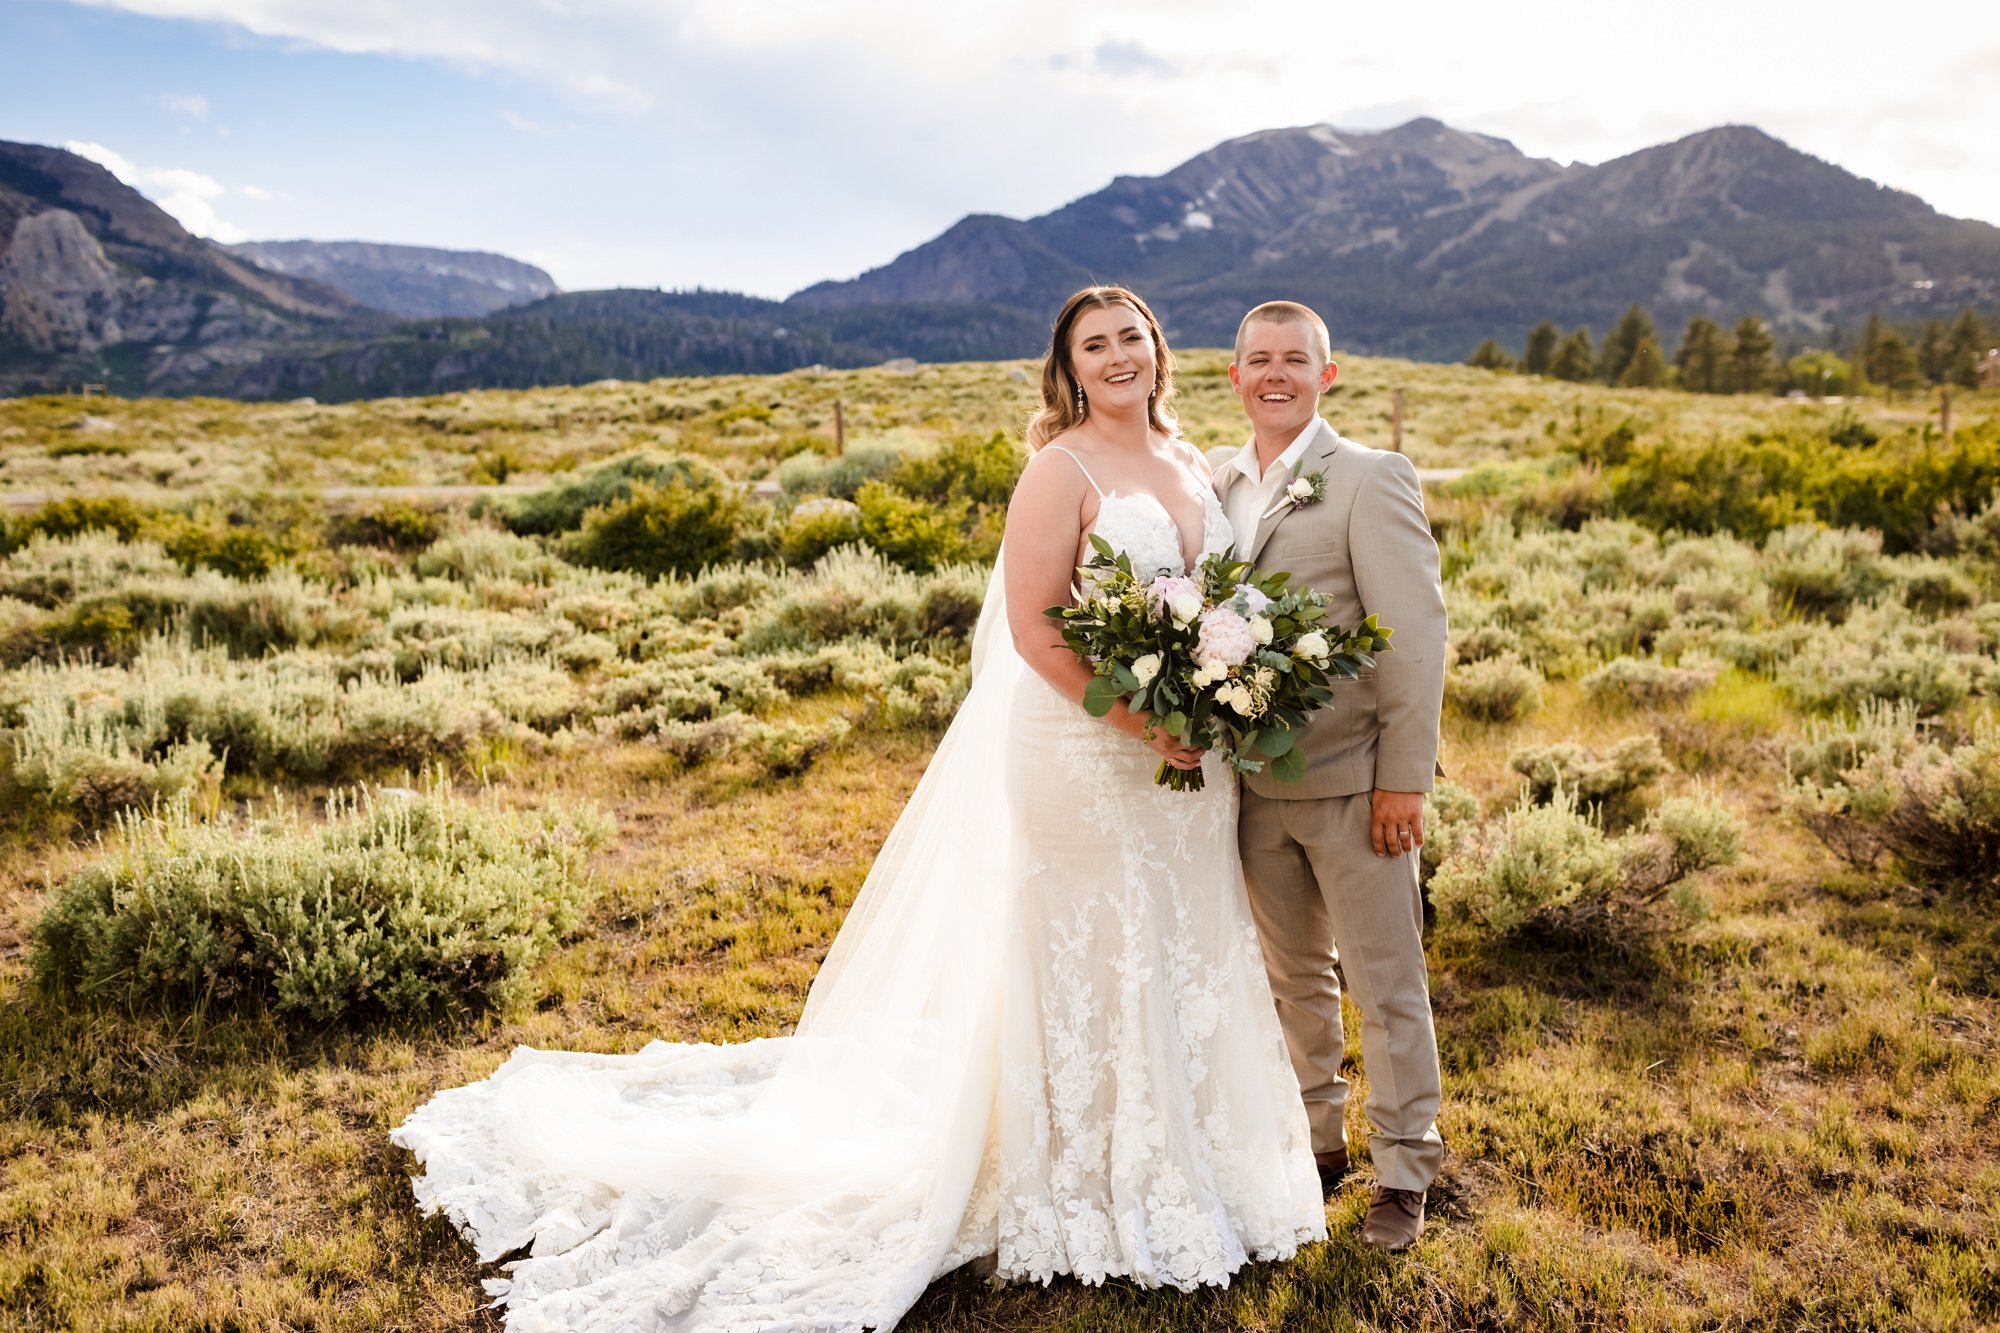 Sierra-Meadows-Ranch-Mammoth-Lakes-Wedding-62.jpg